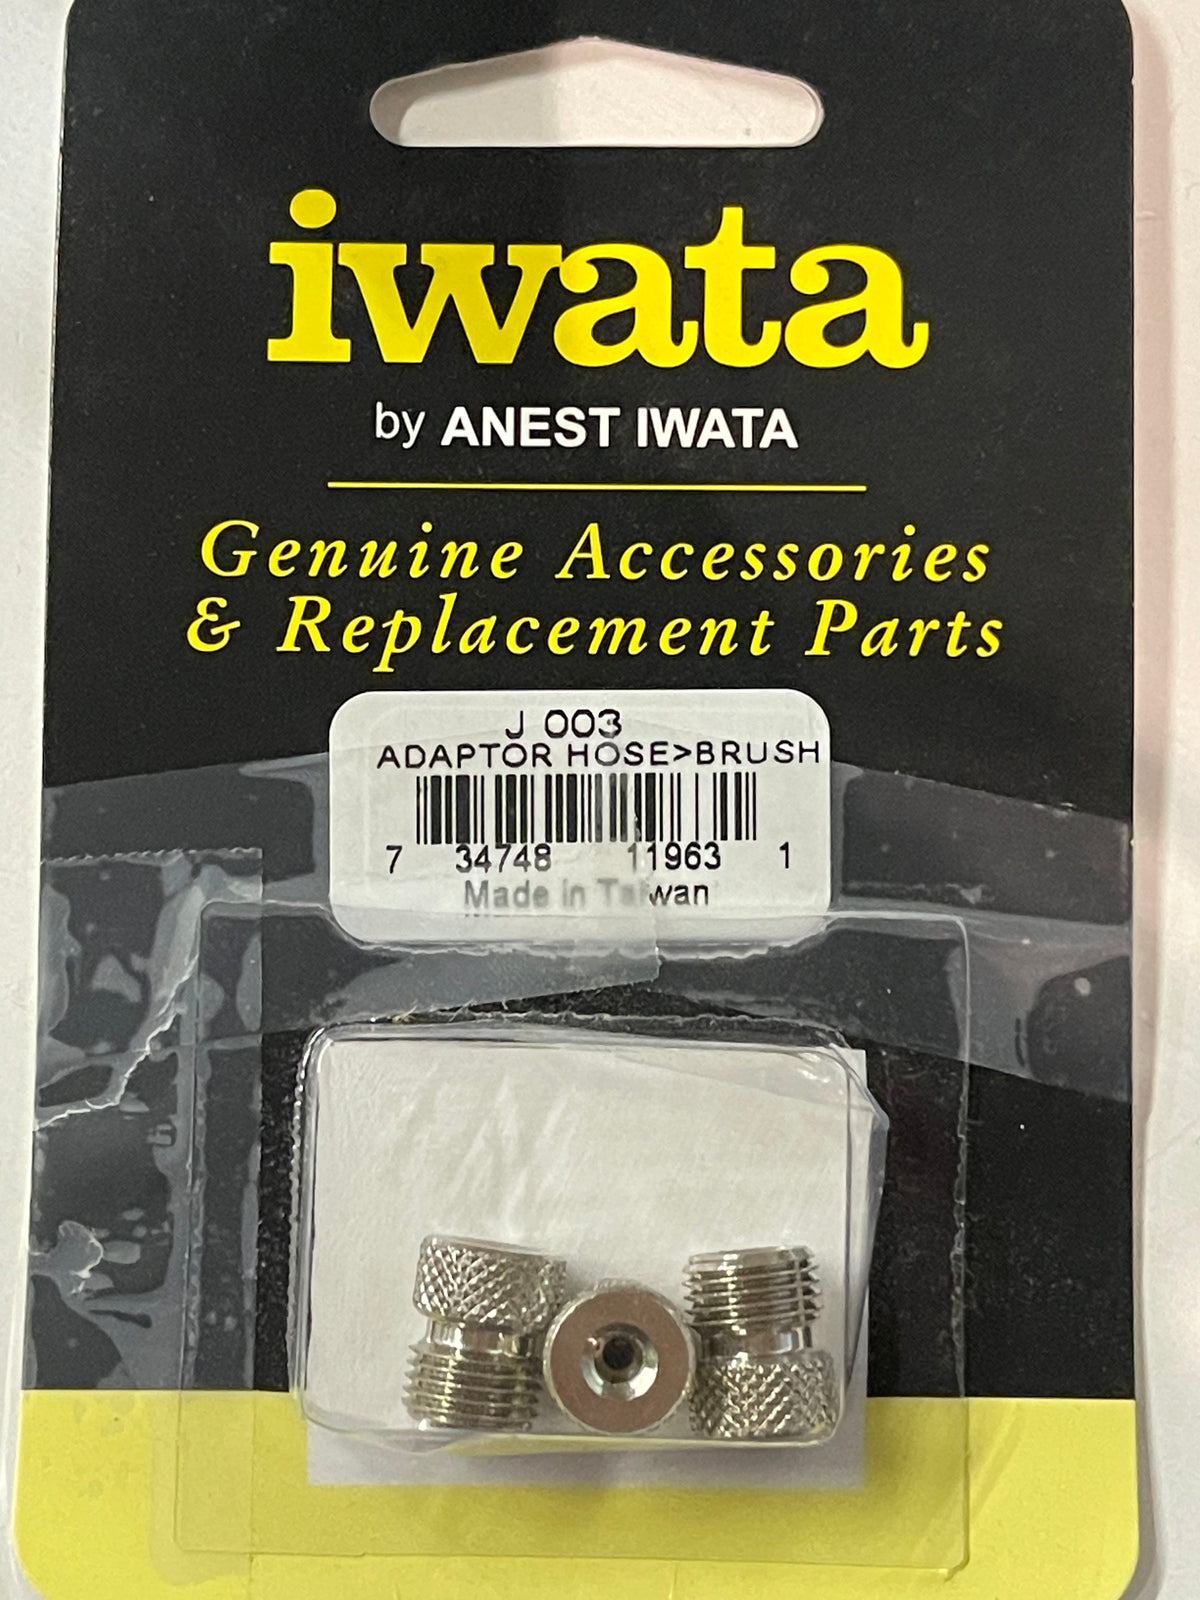 Bargain Basement - Iwata J 003 Air Hose Adaptor Set - Not used but packaging opened